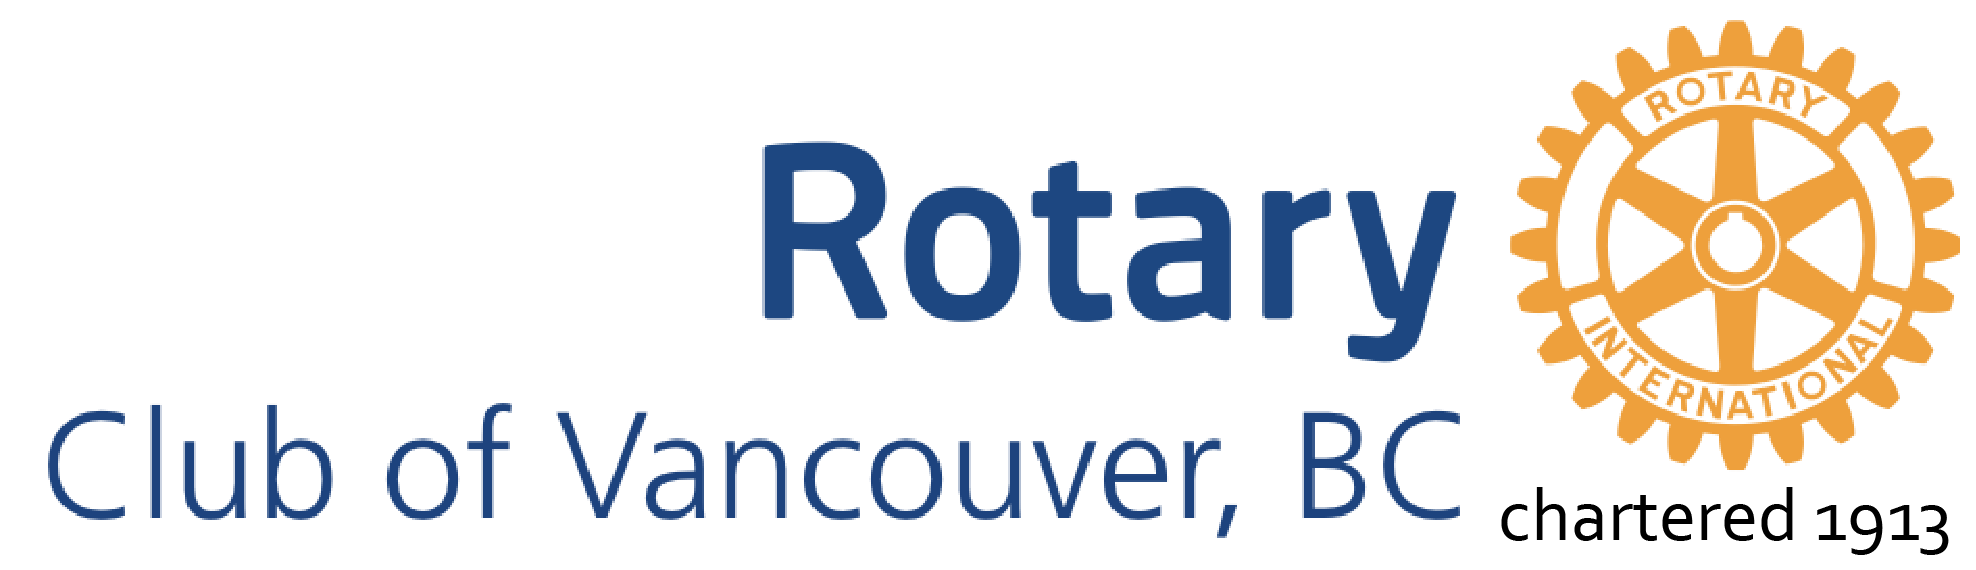 Vancouver Rotary Club LightBG_rcov-logo-transparent-with-1913